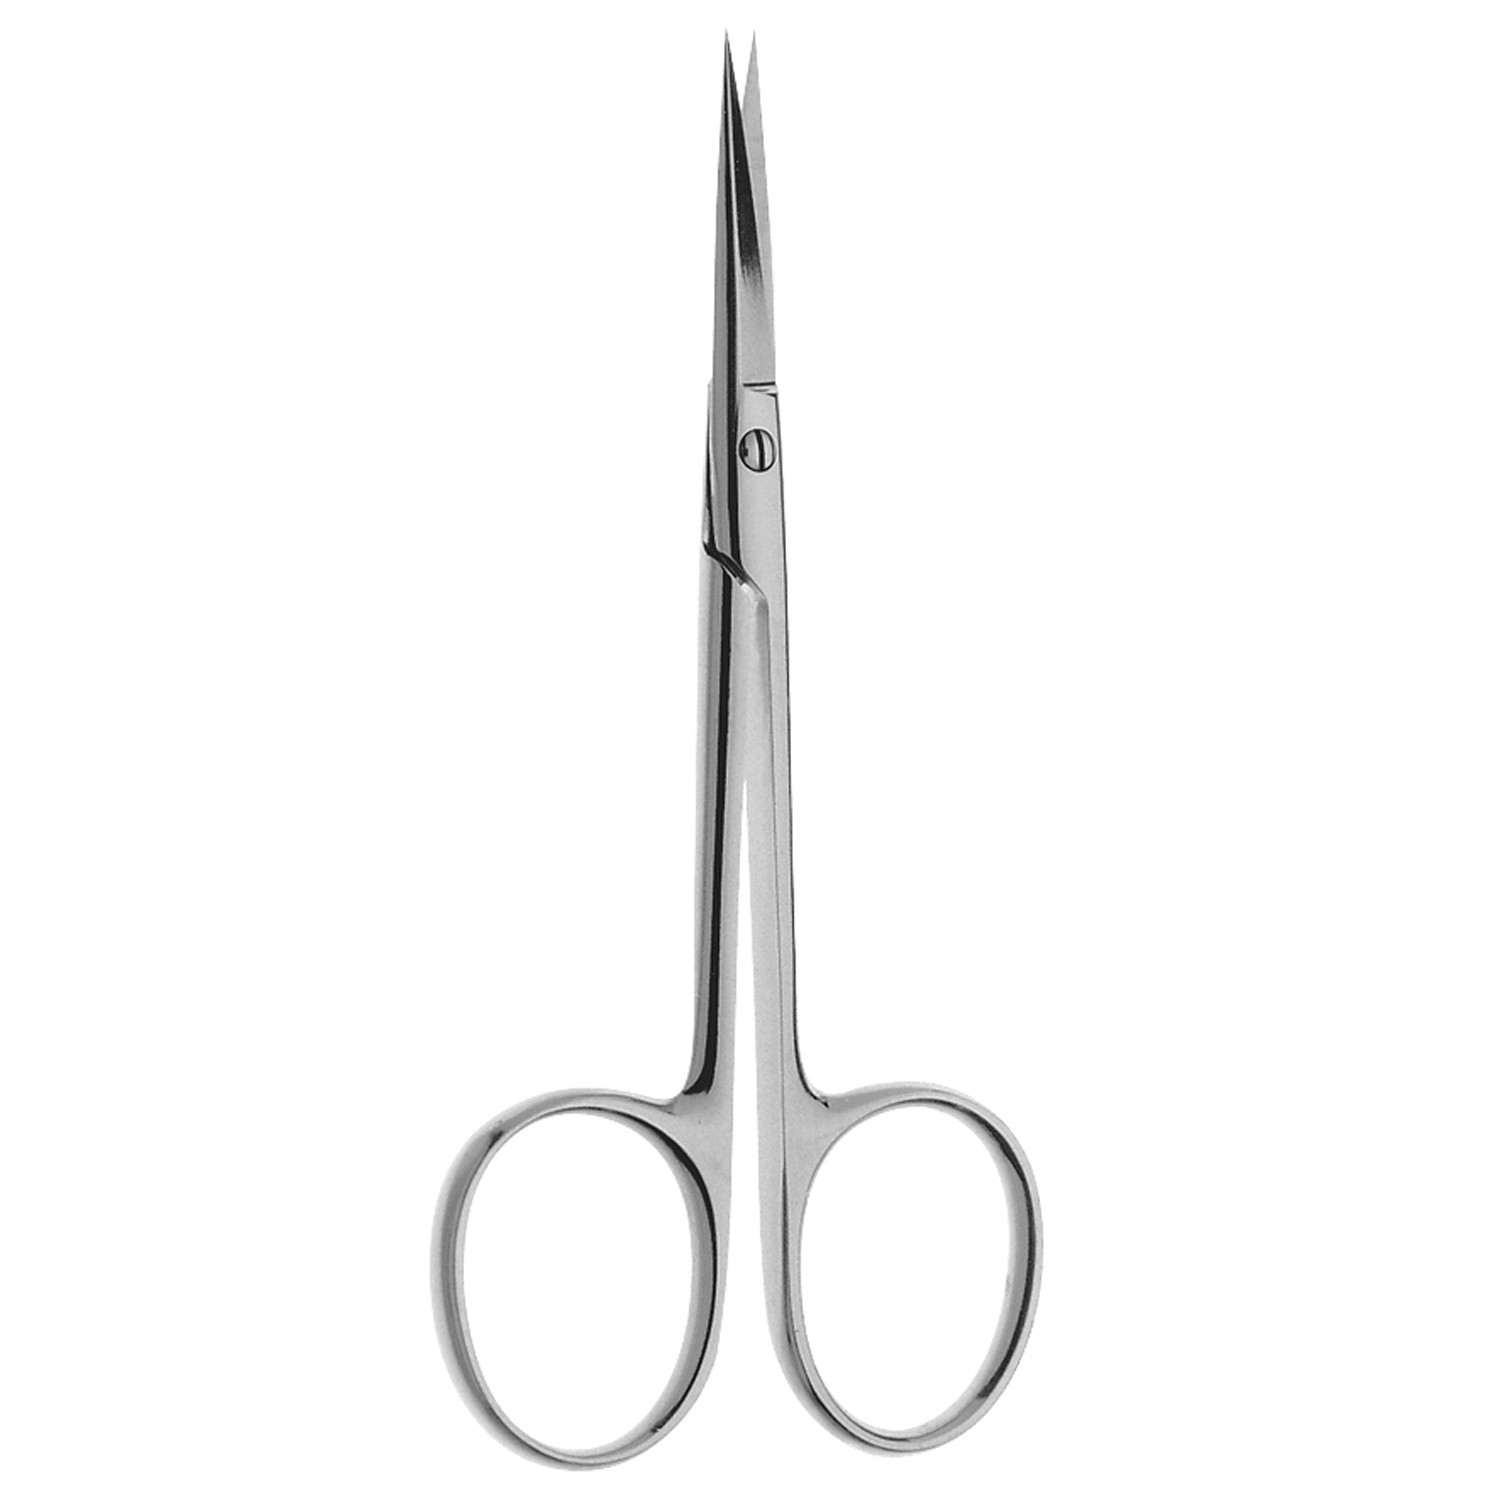 Knapp Iris Scissors, 4" (10.2 Cm), Curved, Blunt/Blunt Points